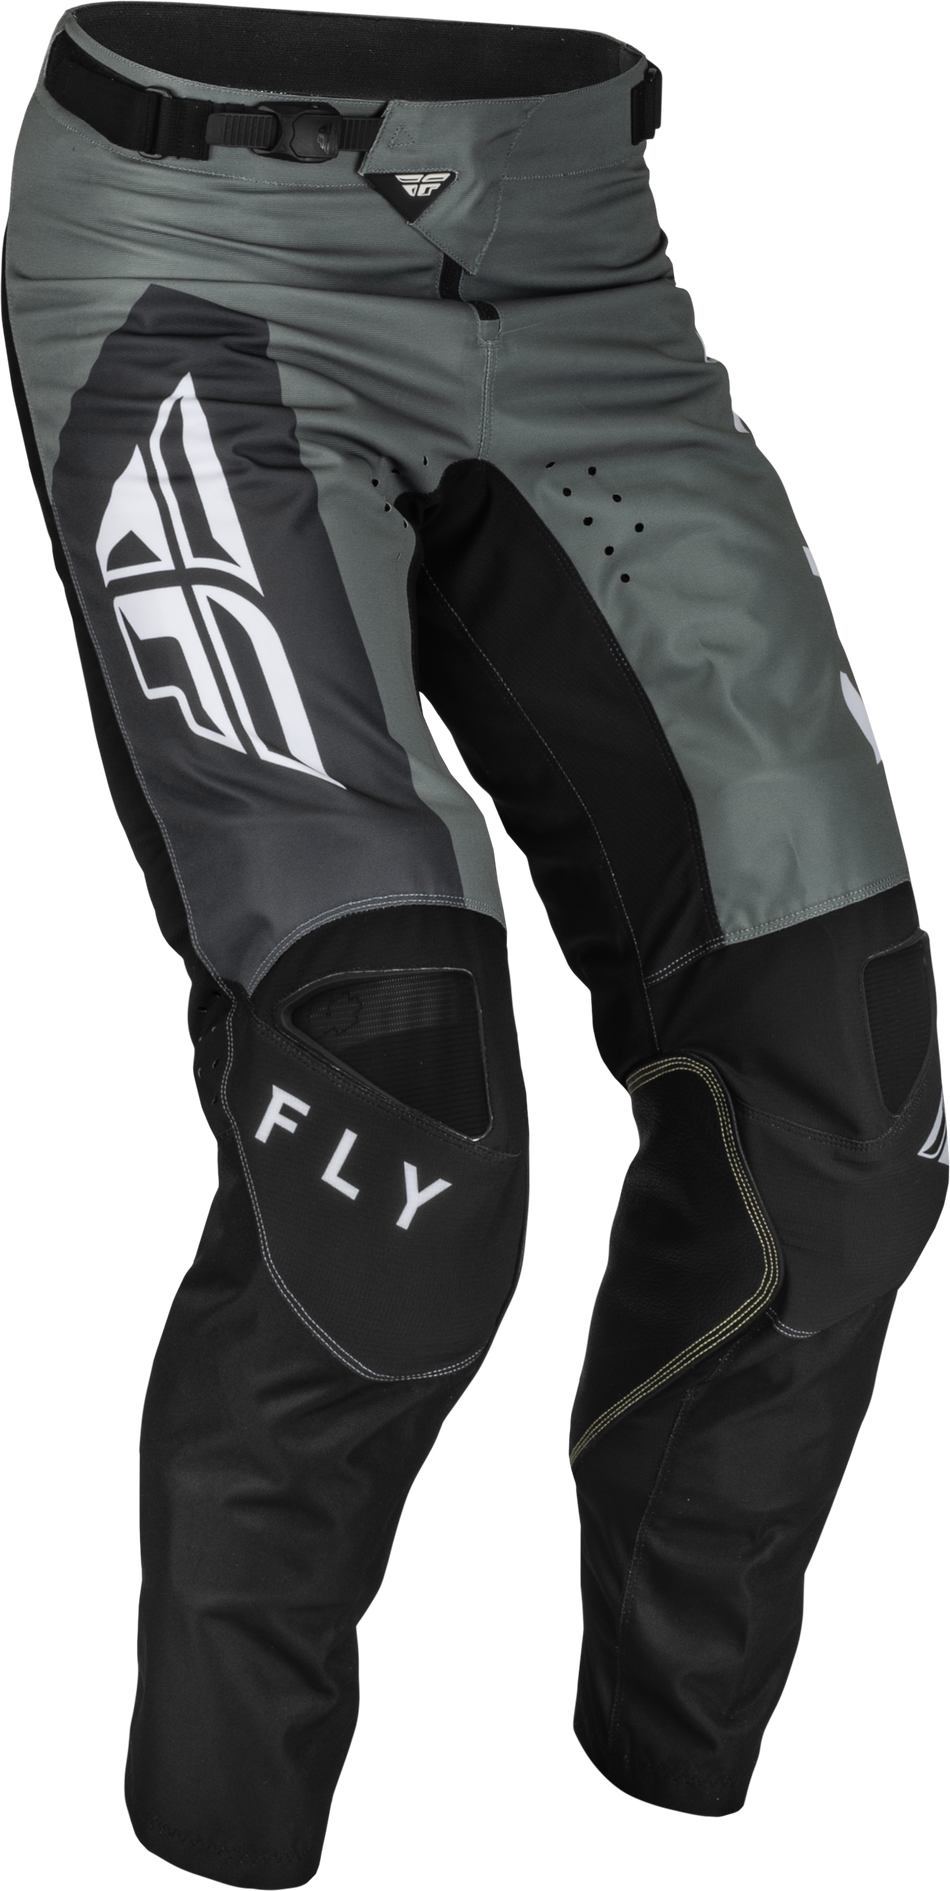 FLY RACING Kinetic Jet Pants Grey/Dark Grey/Black Sz 34 376-53334